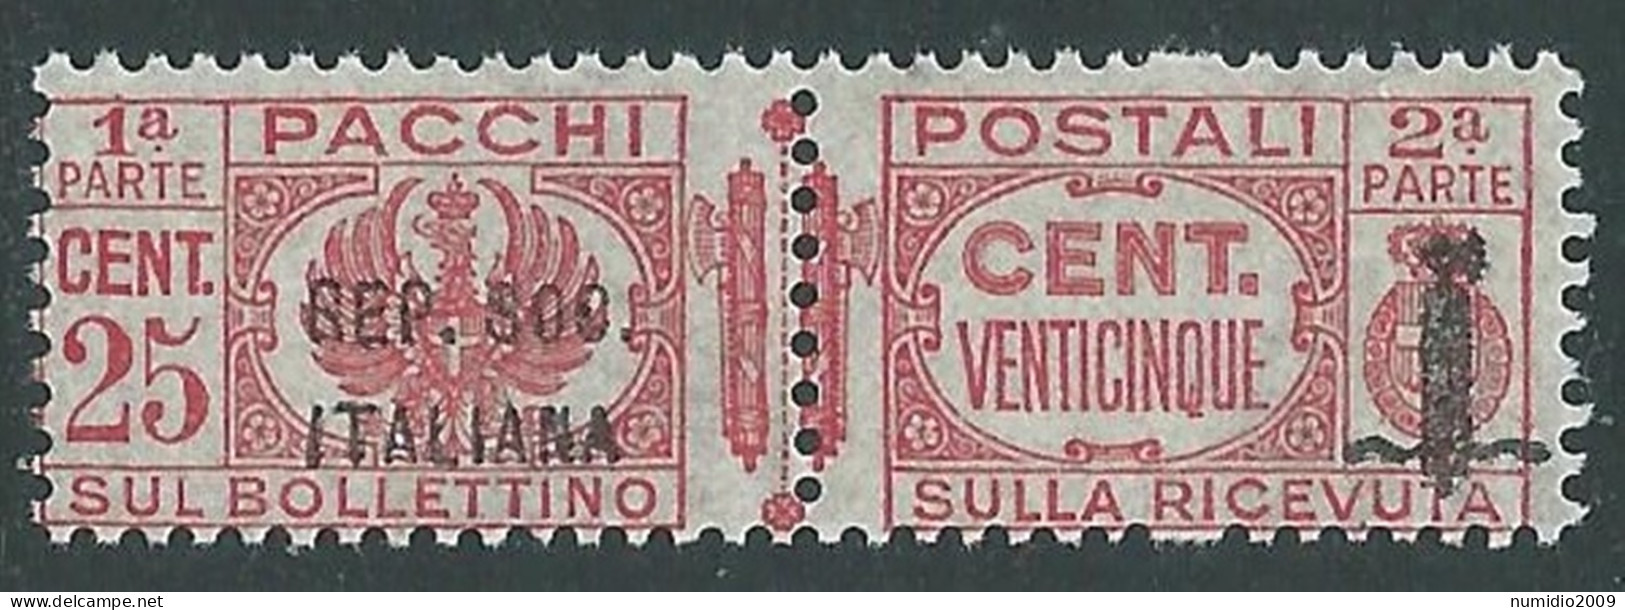 1944 RSI PACCHI POSTALI 25 CENT MNH ** - P29-4 - Postal Parcels